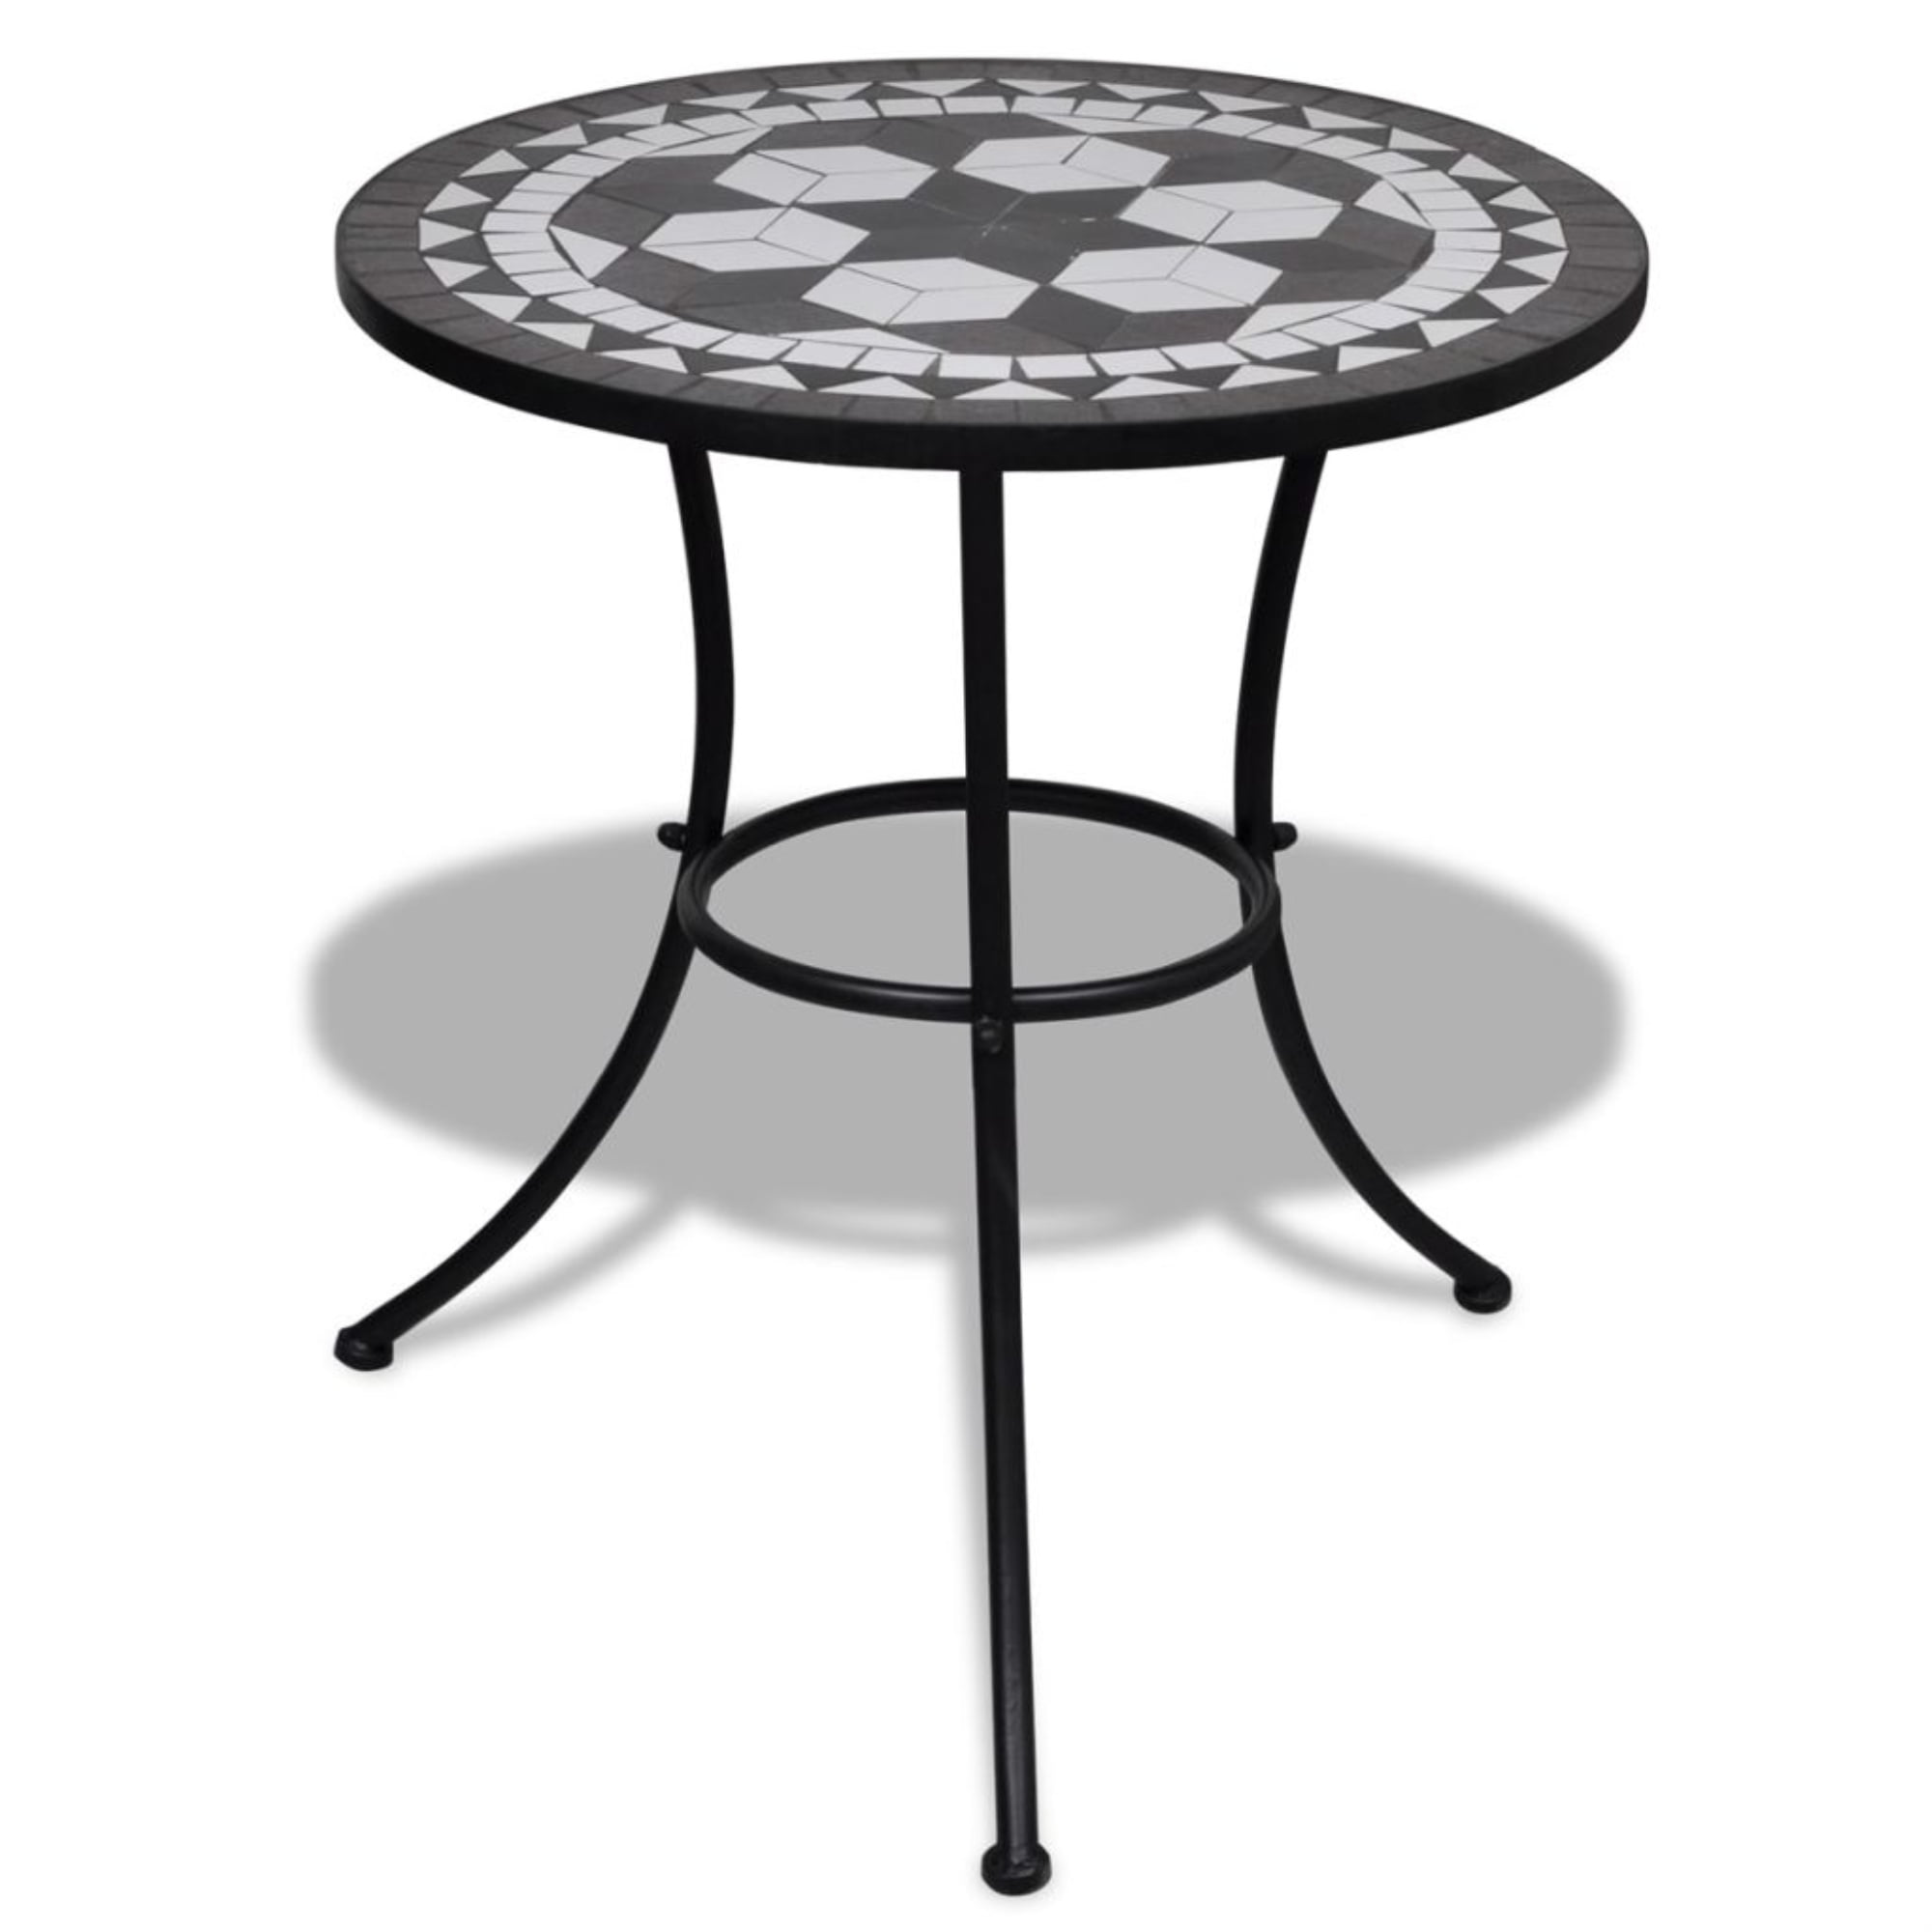 ROUND BISTRO TABLE BLACK SILVER FRAME GLASS OUTDOOR GARDEN PATIO FURNITURE CAFE 